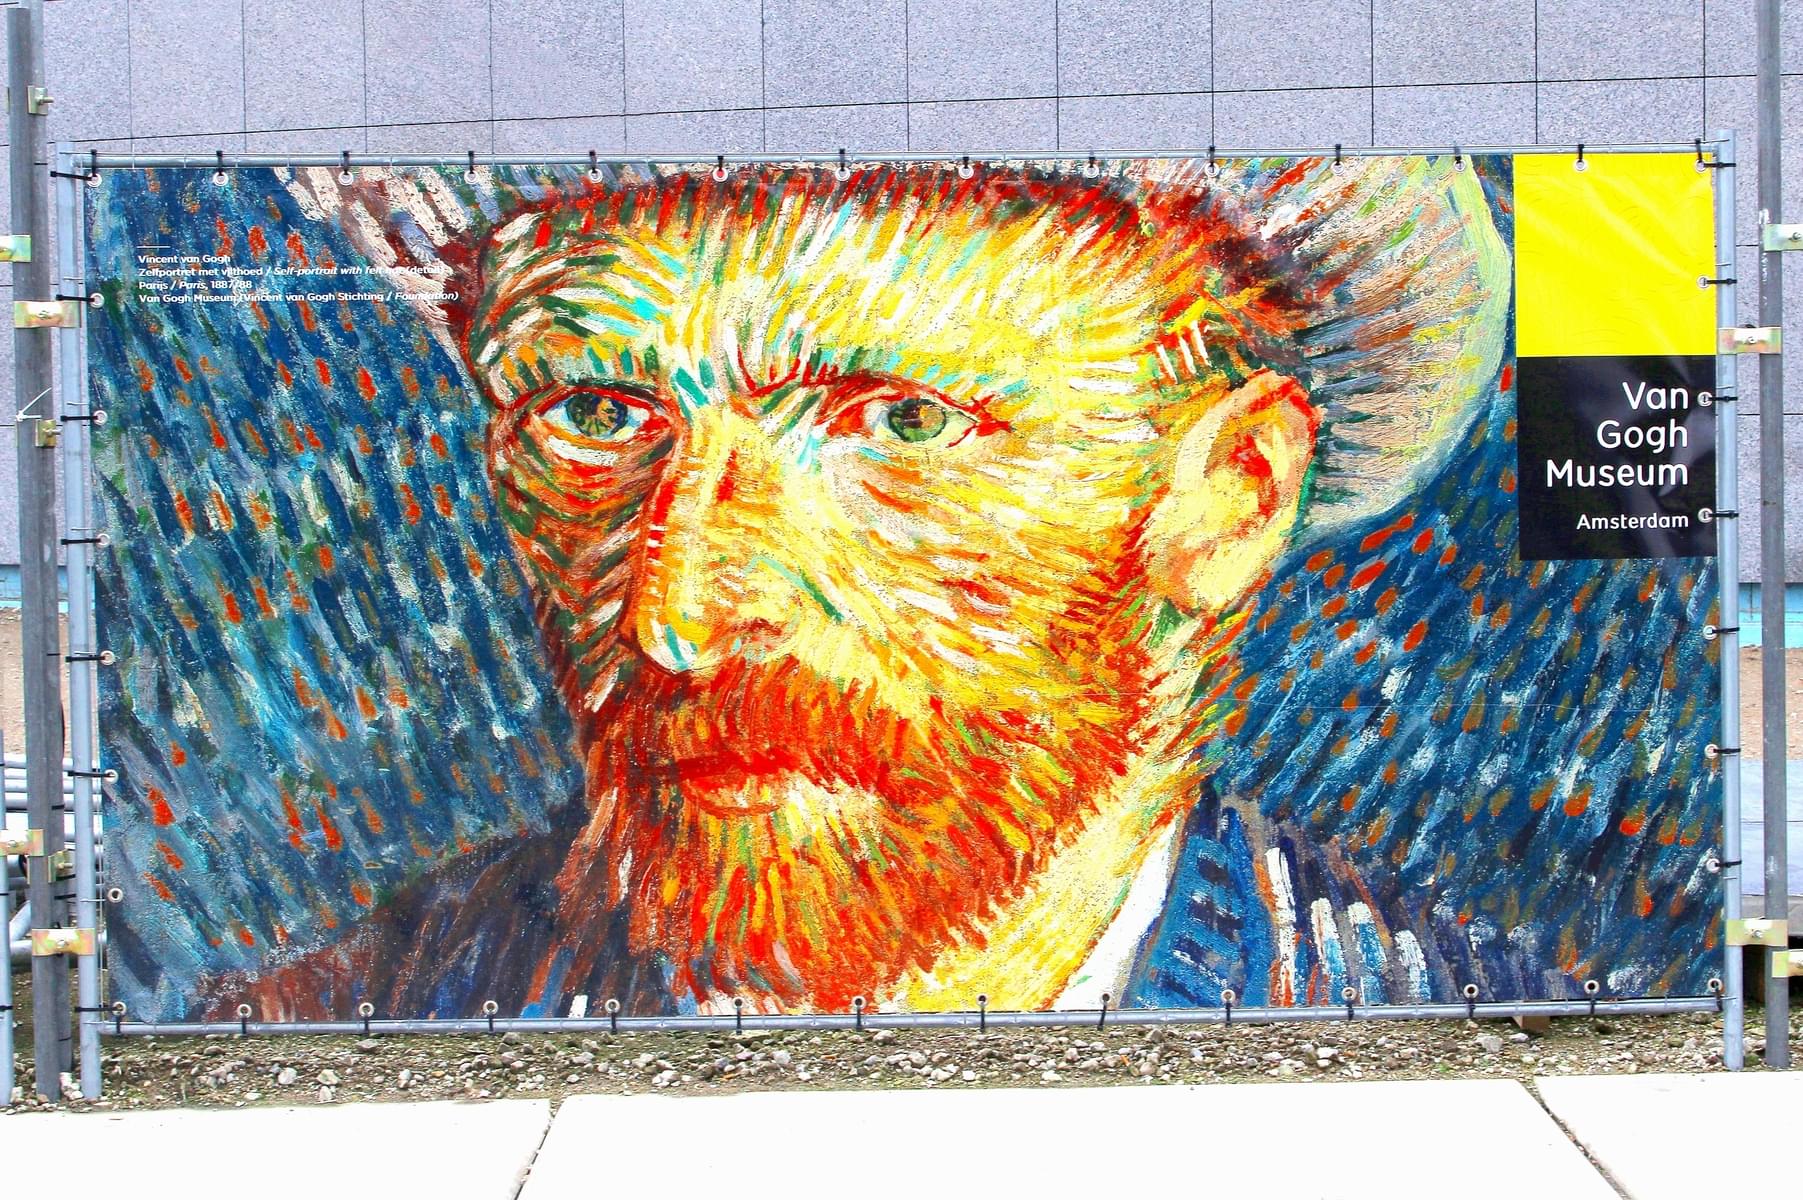 Marvel at the eccentric self portraits of Van Gogh